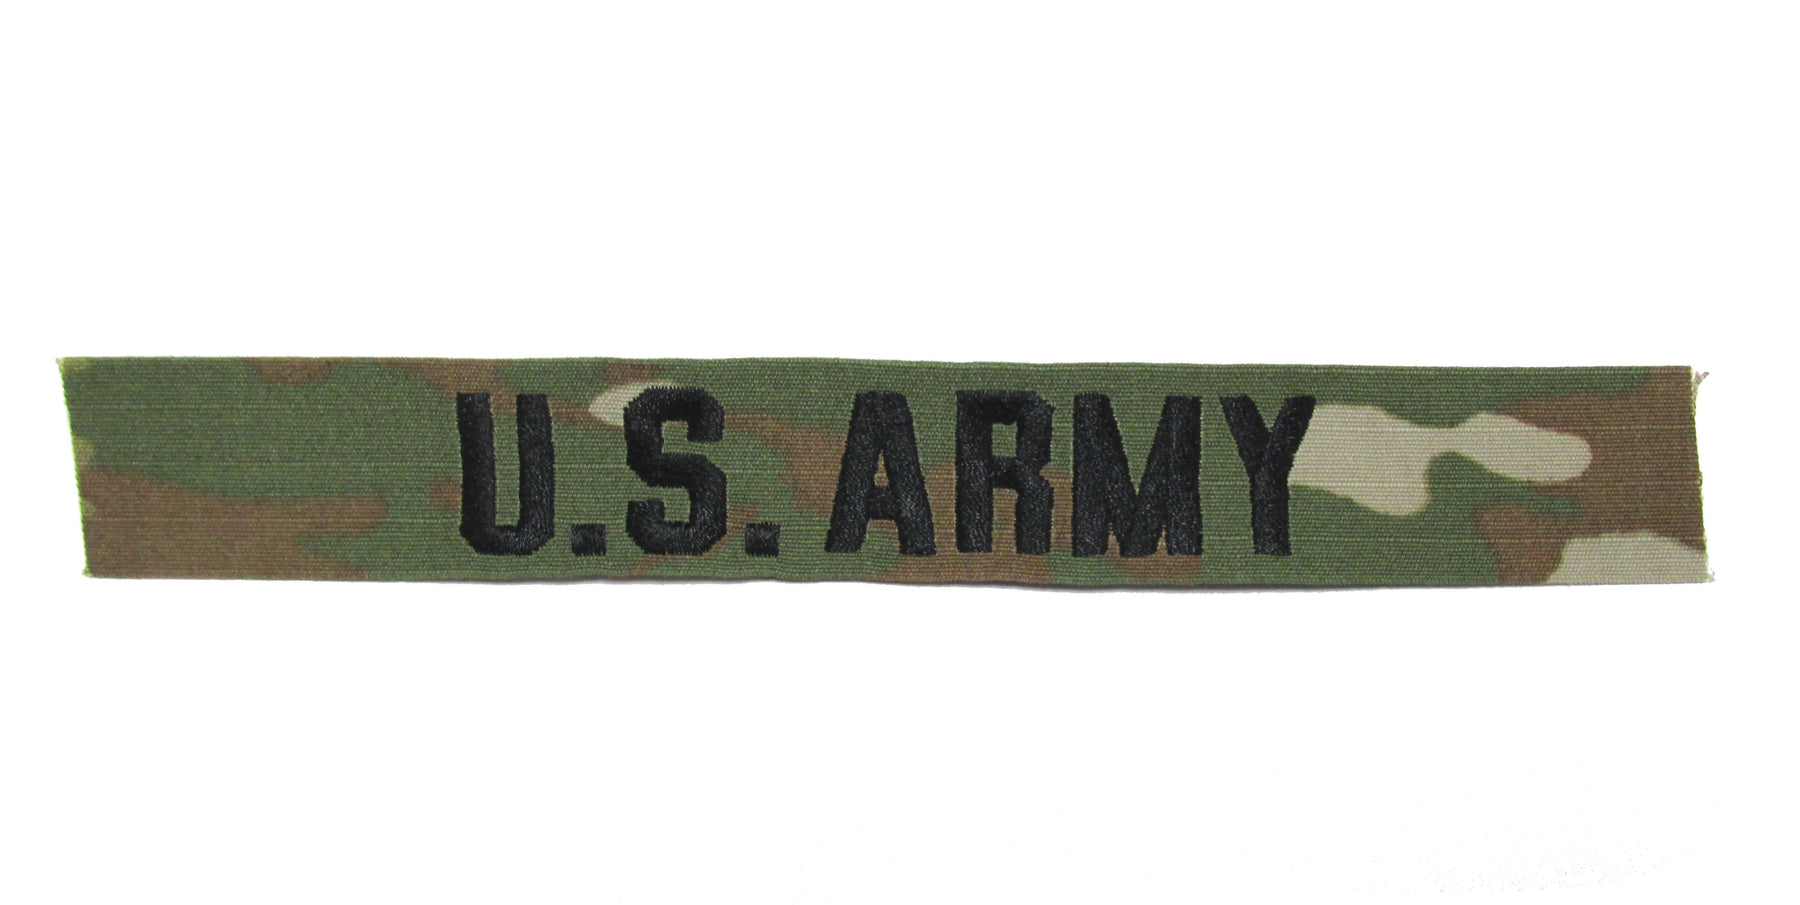 Ocp U.S. Army Name Tape